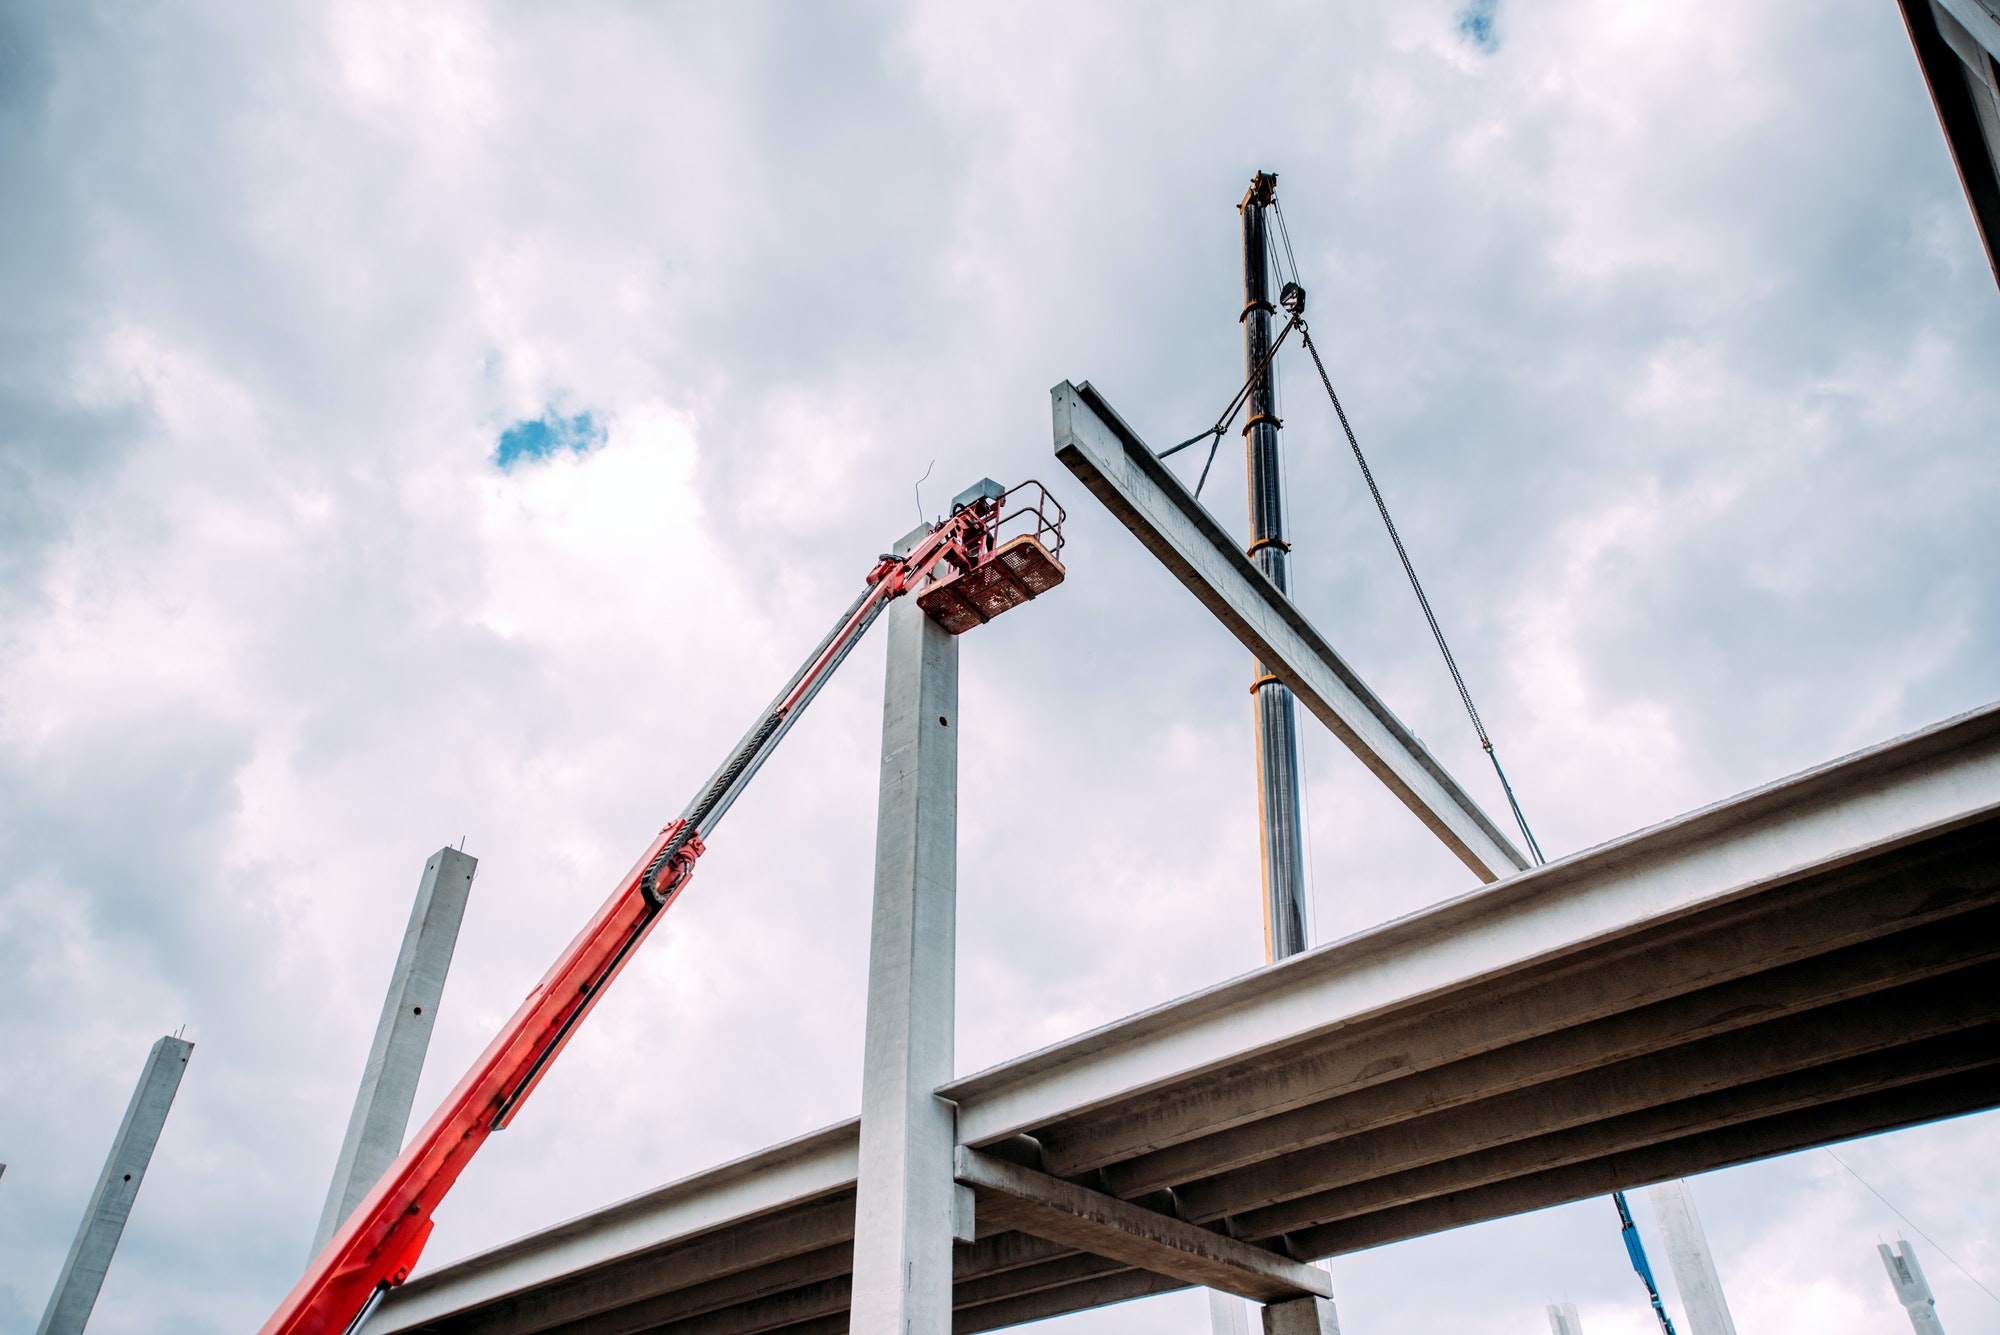 Details of construction site with crane lifting prefabricated concrete framework